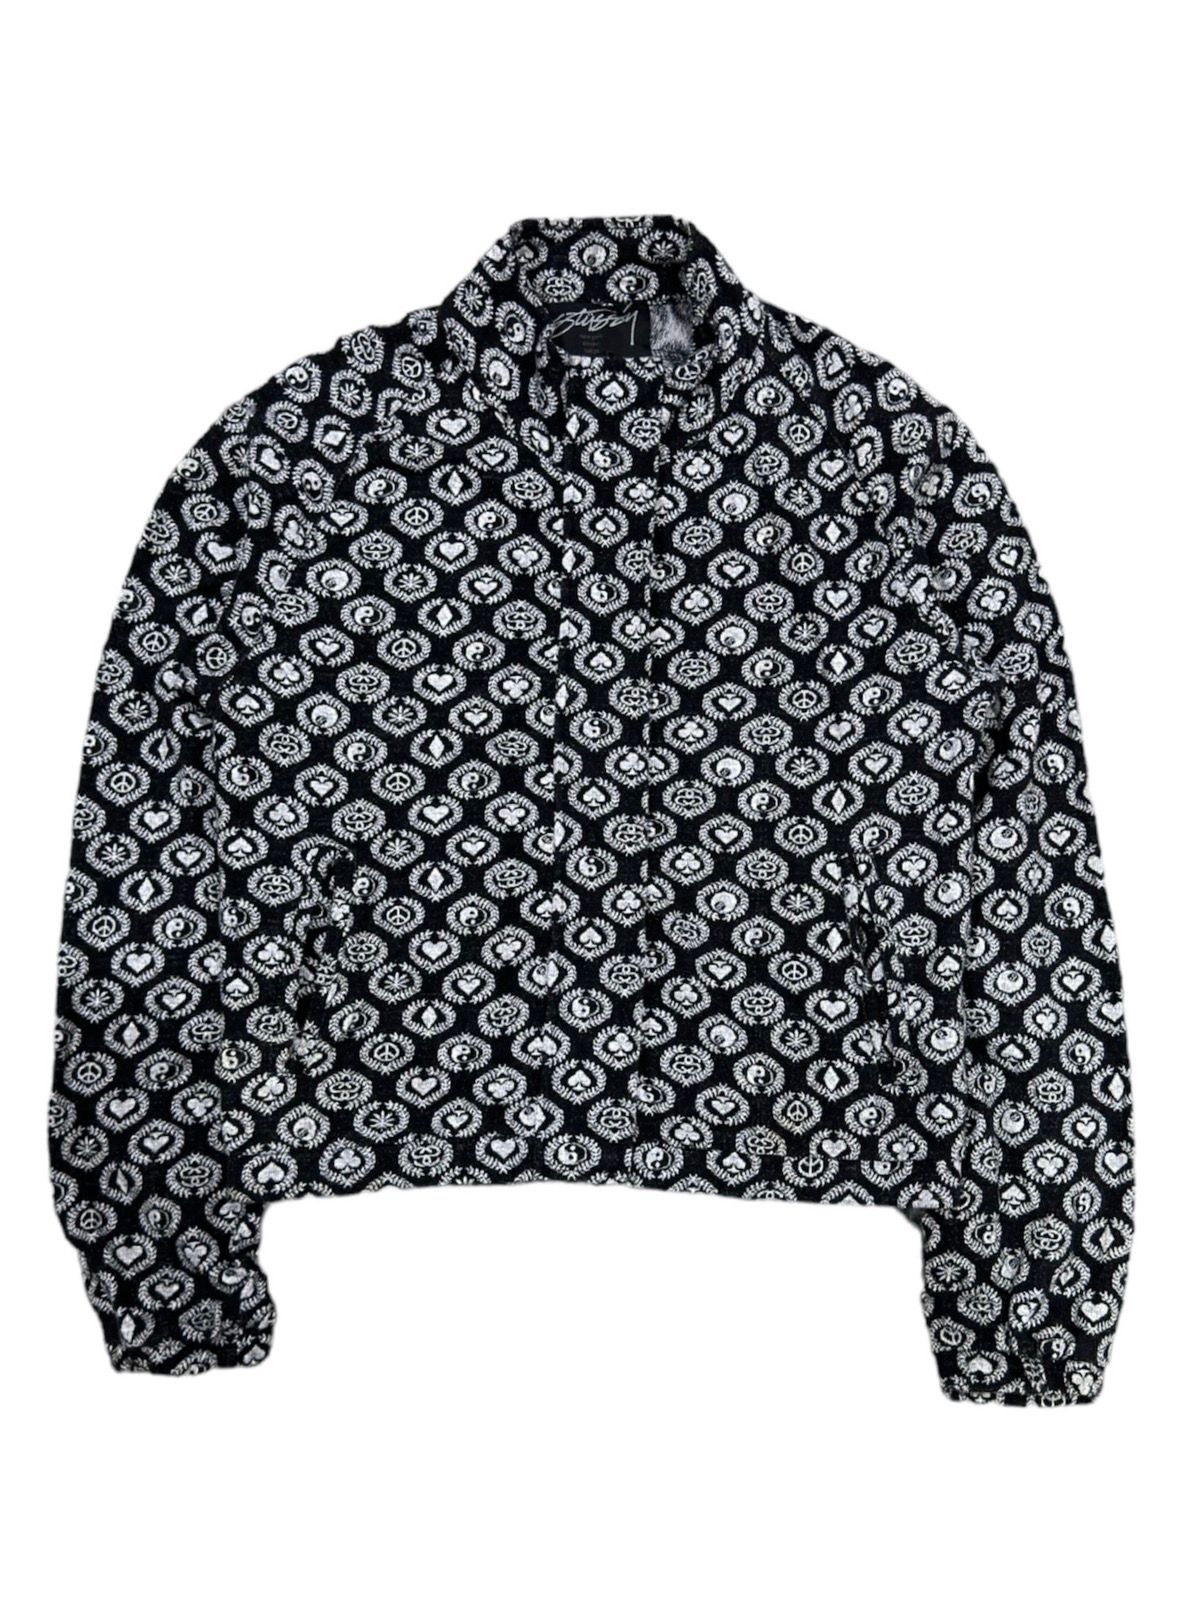 Stüssy Ol Yin Yang Black Jade Towel Zipper Jacket - 1